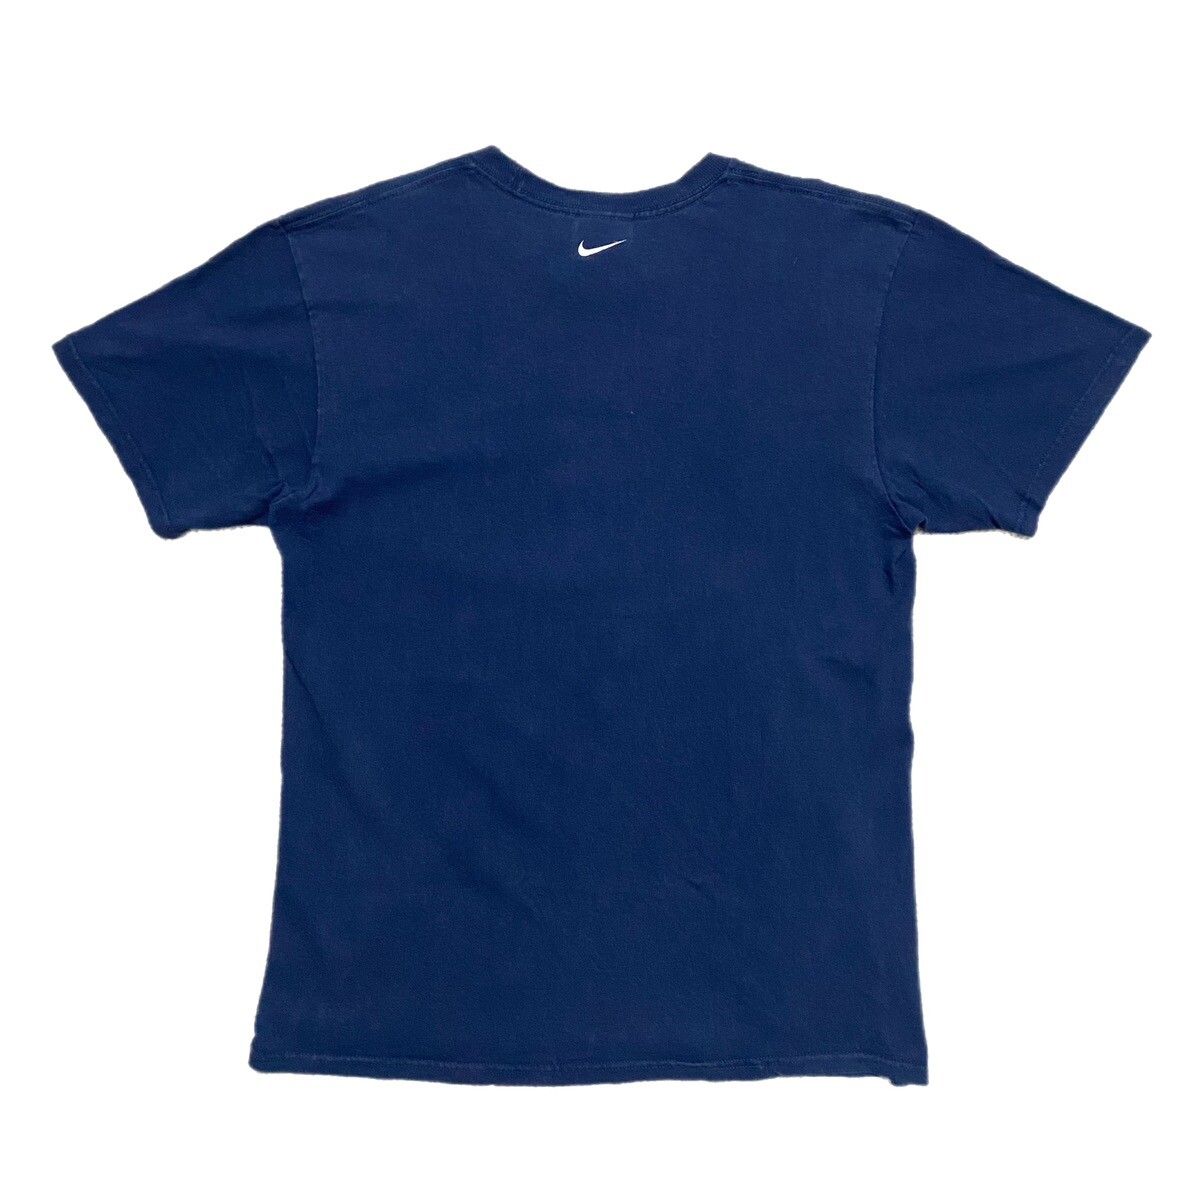 Nike Northwood University Seahawks Tshirt - 2